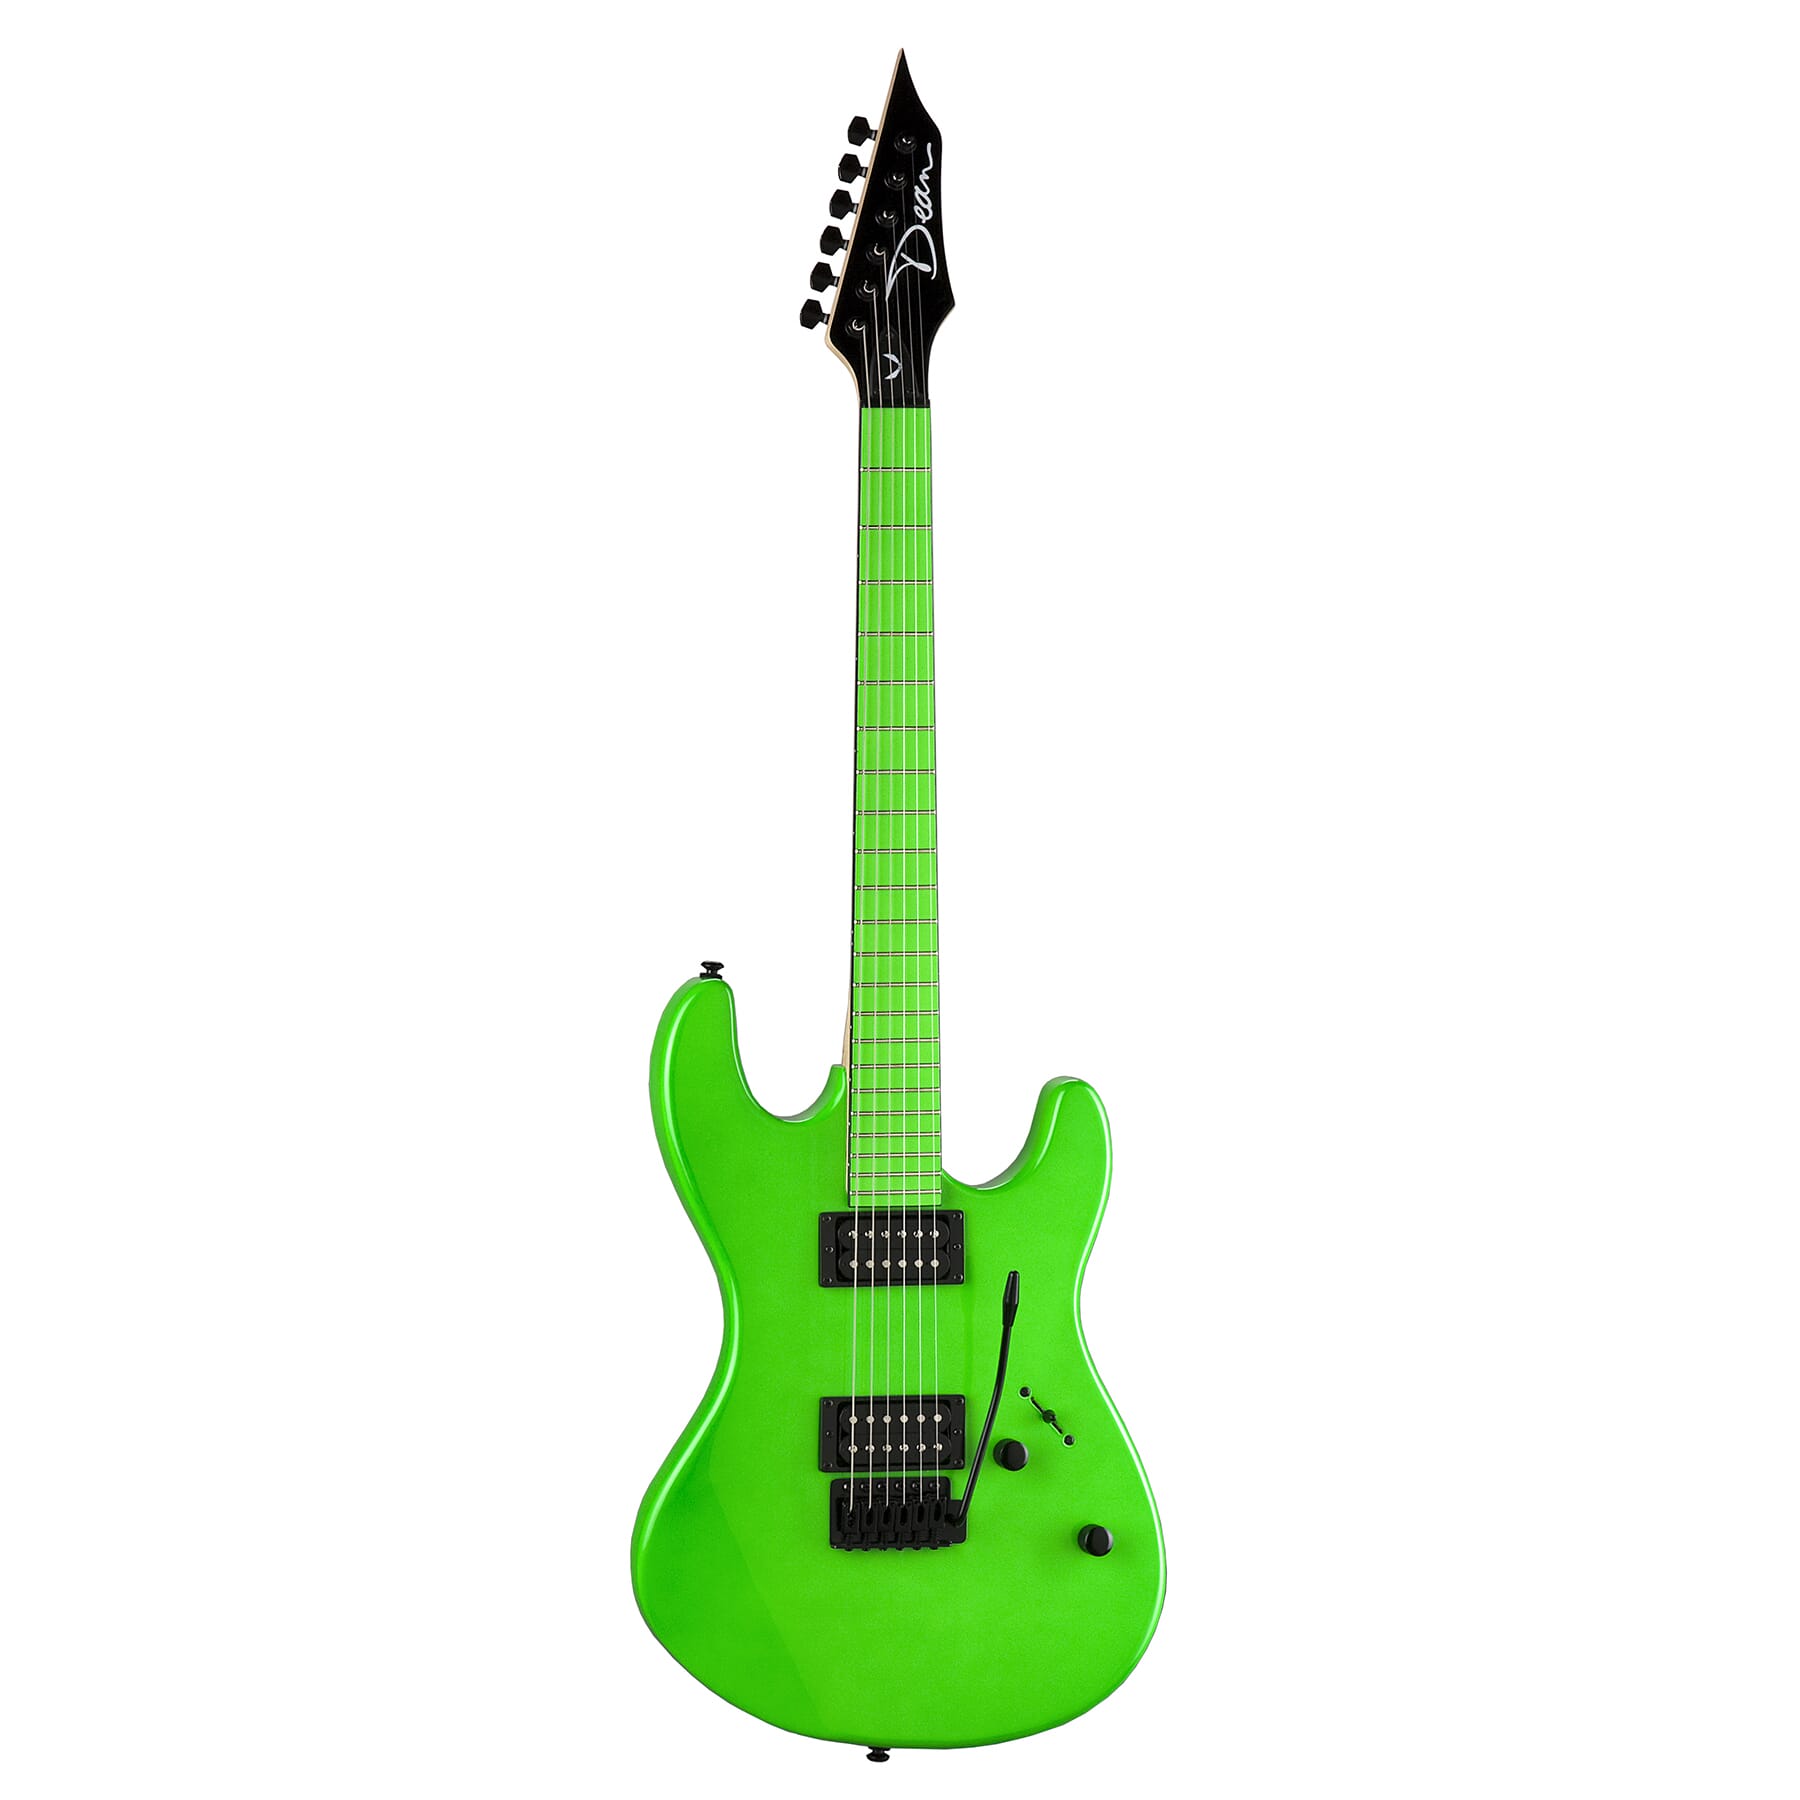 Custom Zone 2 HB - Florescent Green | Dean Guitars